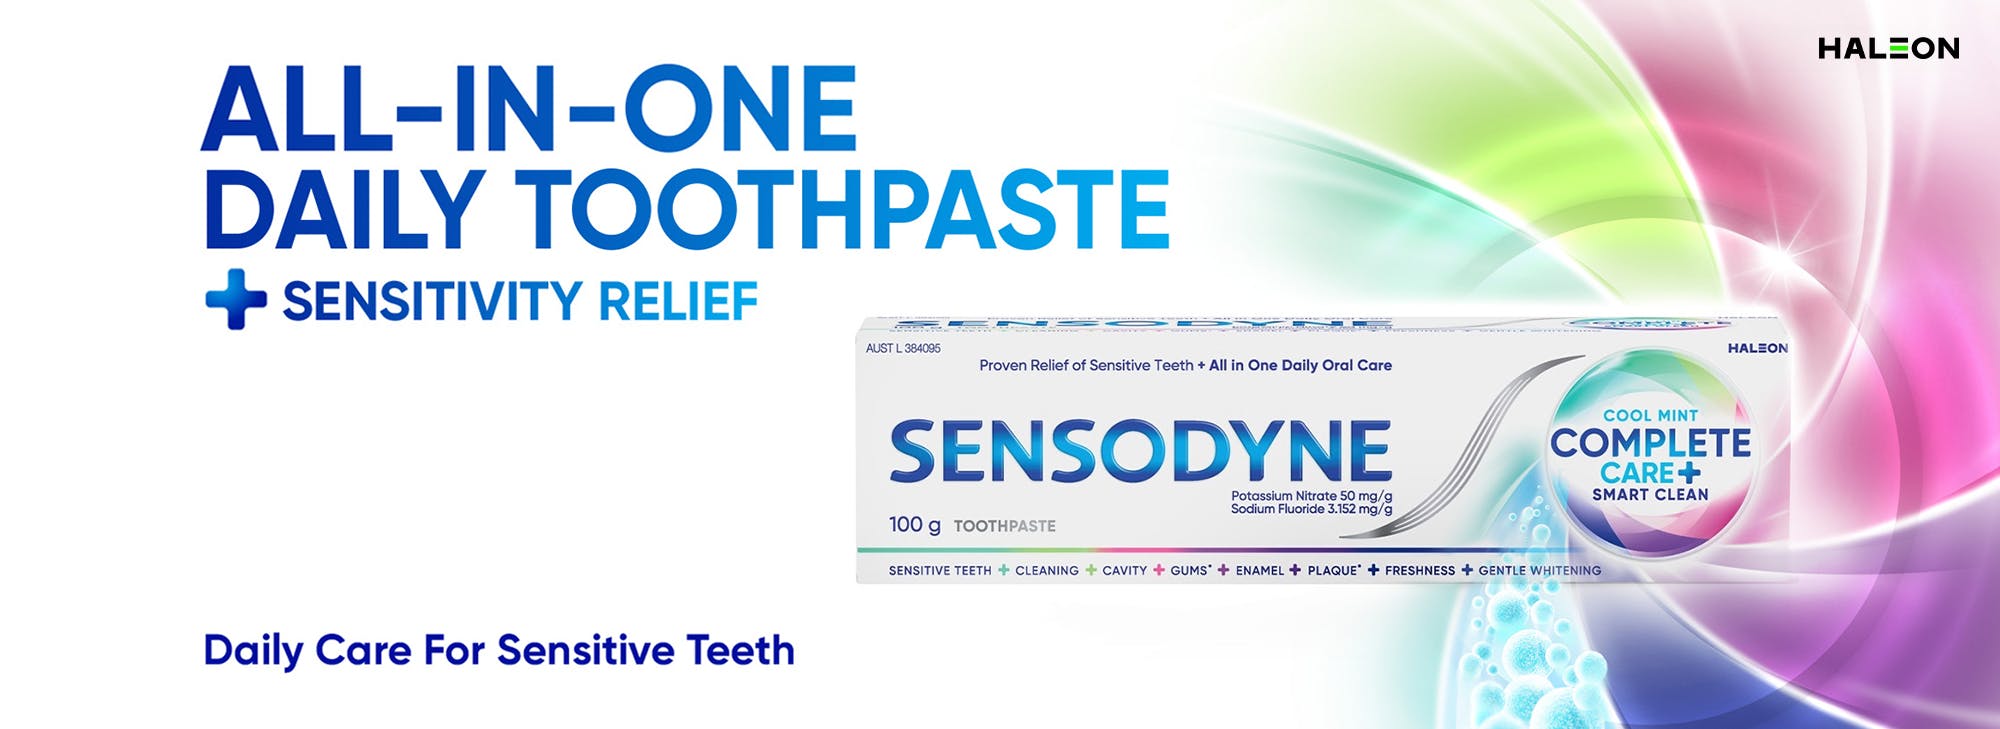 Sensodyne Complete Care+ Smart Clean